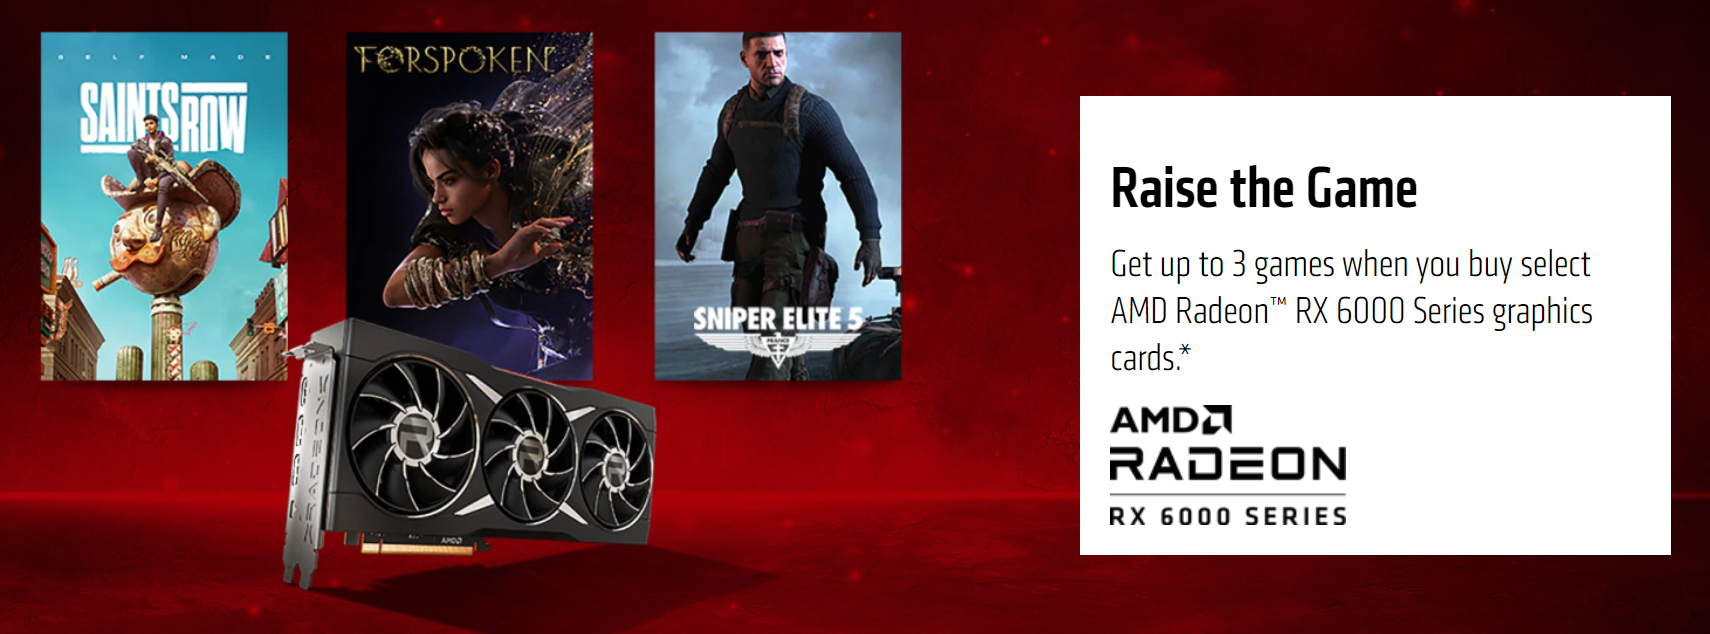 AMD เปิดตัวชุดเกมบันเดิล AMD Radeon Raise the Game Bundle สำหรับผู้ที่ซื้อผลิตภัณธ์กราฟิกการ์ด AMD Radeon RX 6000 Series